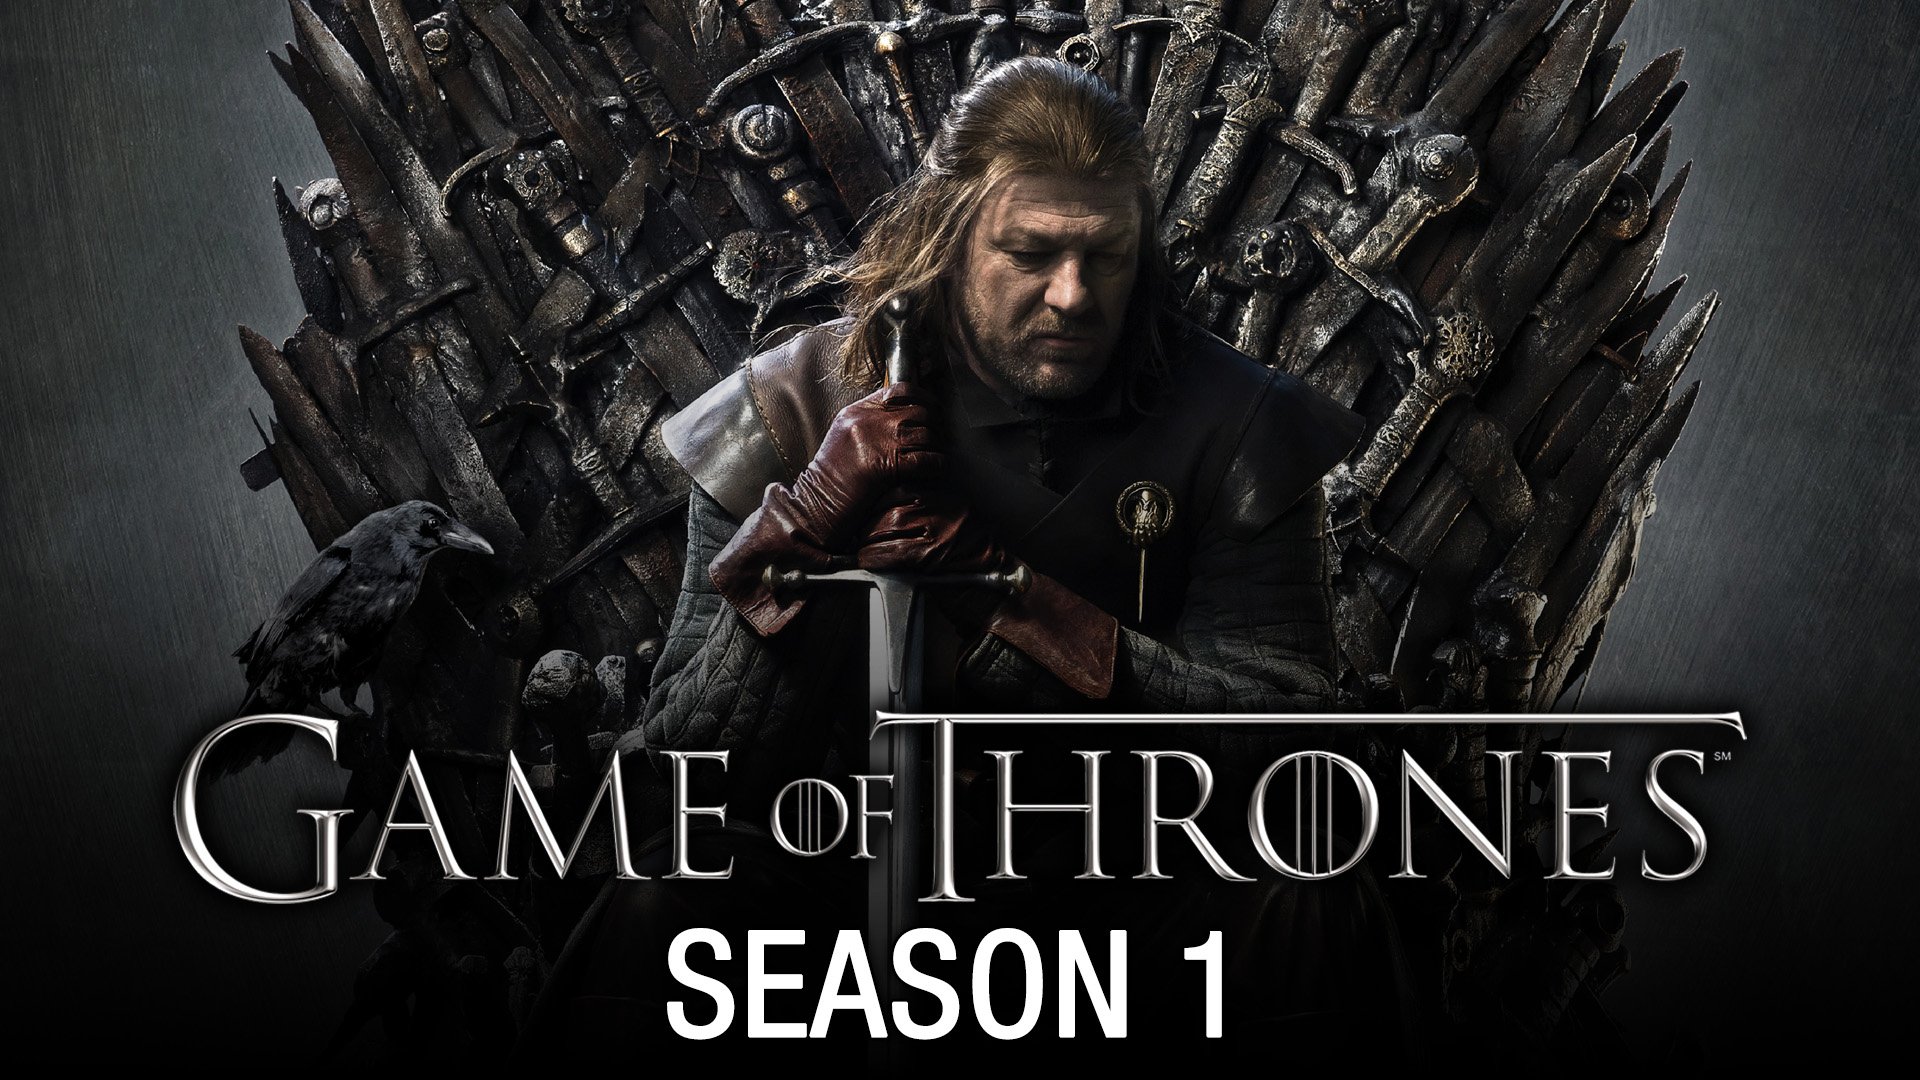 Game of thrones season 1